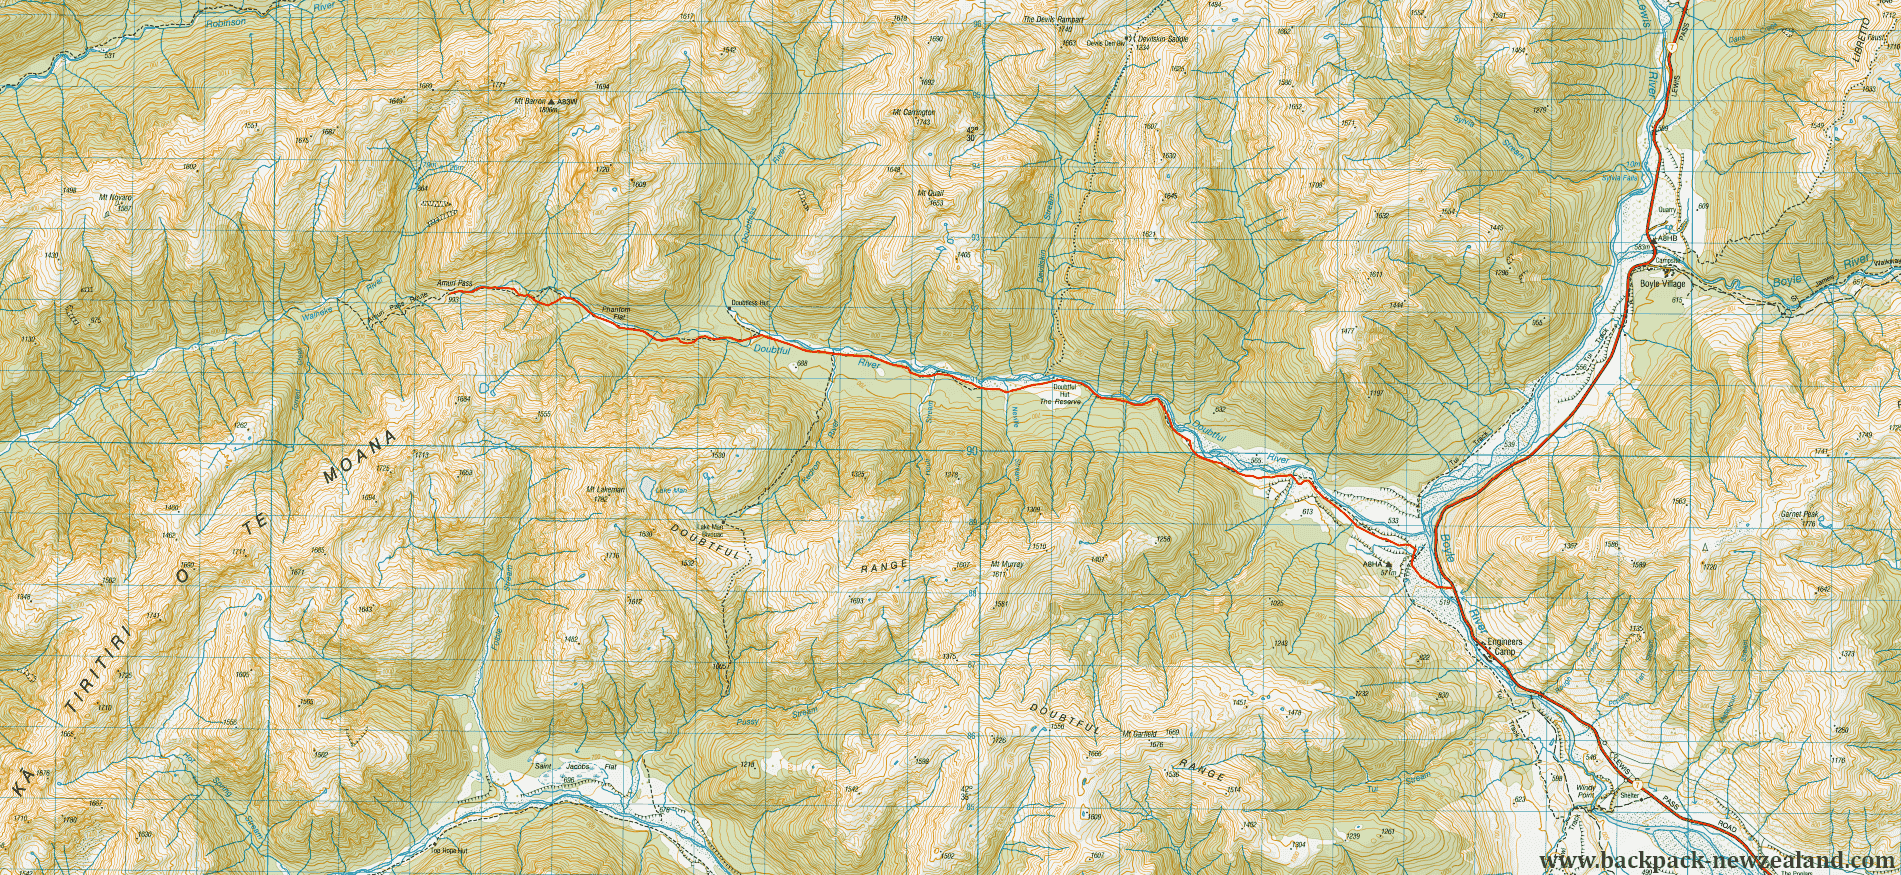 Doubtful Valley To Amuri Pass Track Map - New Zealand Tracks